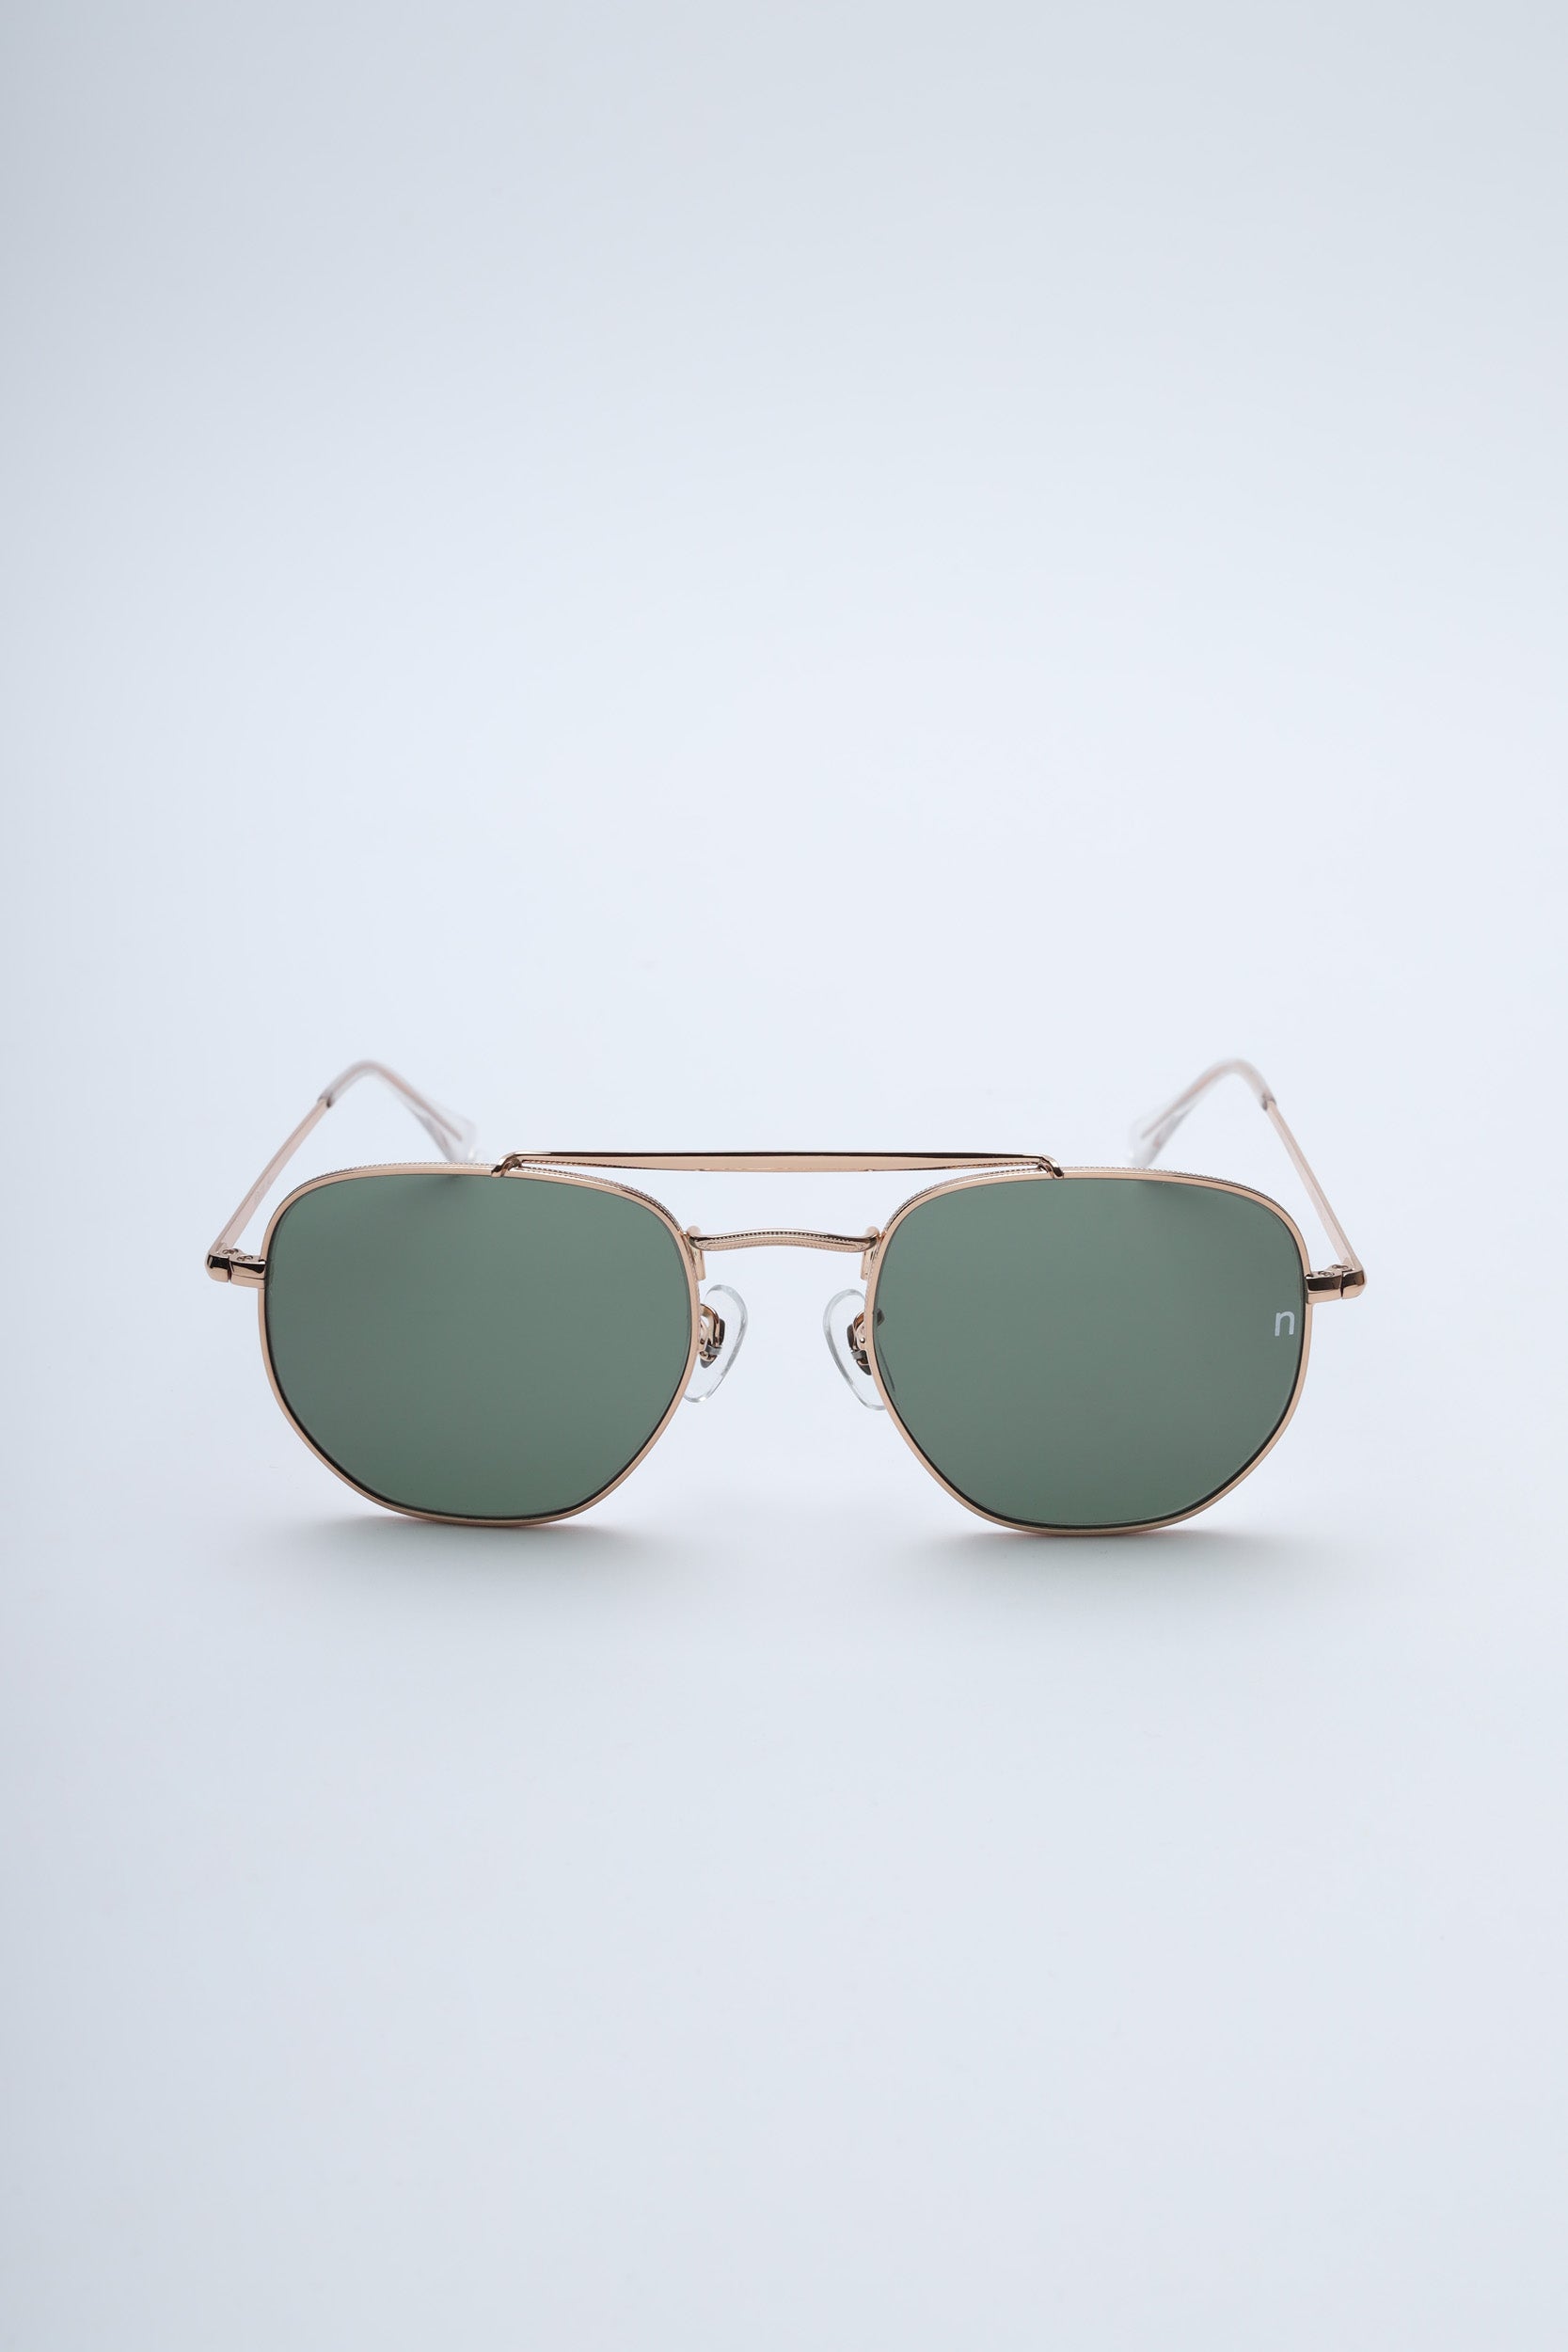 NS1006GFGL PC Green Frame with Green Glass Lens Sunglasses